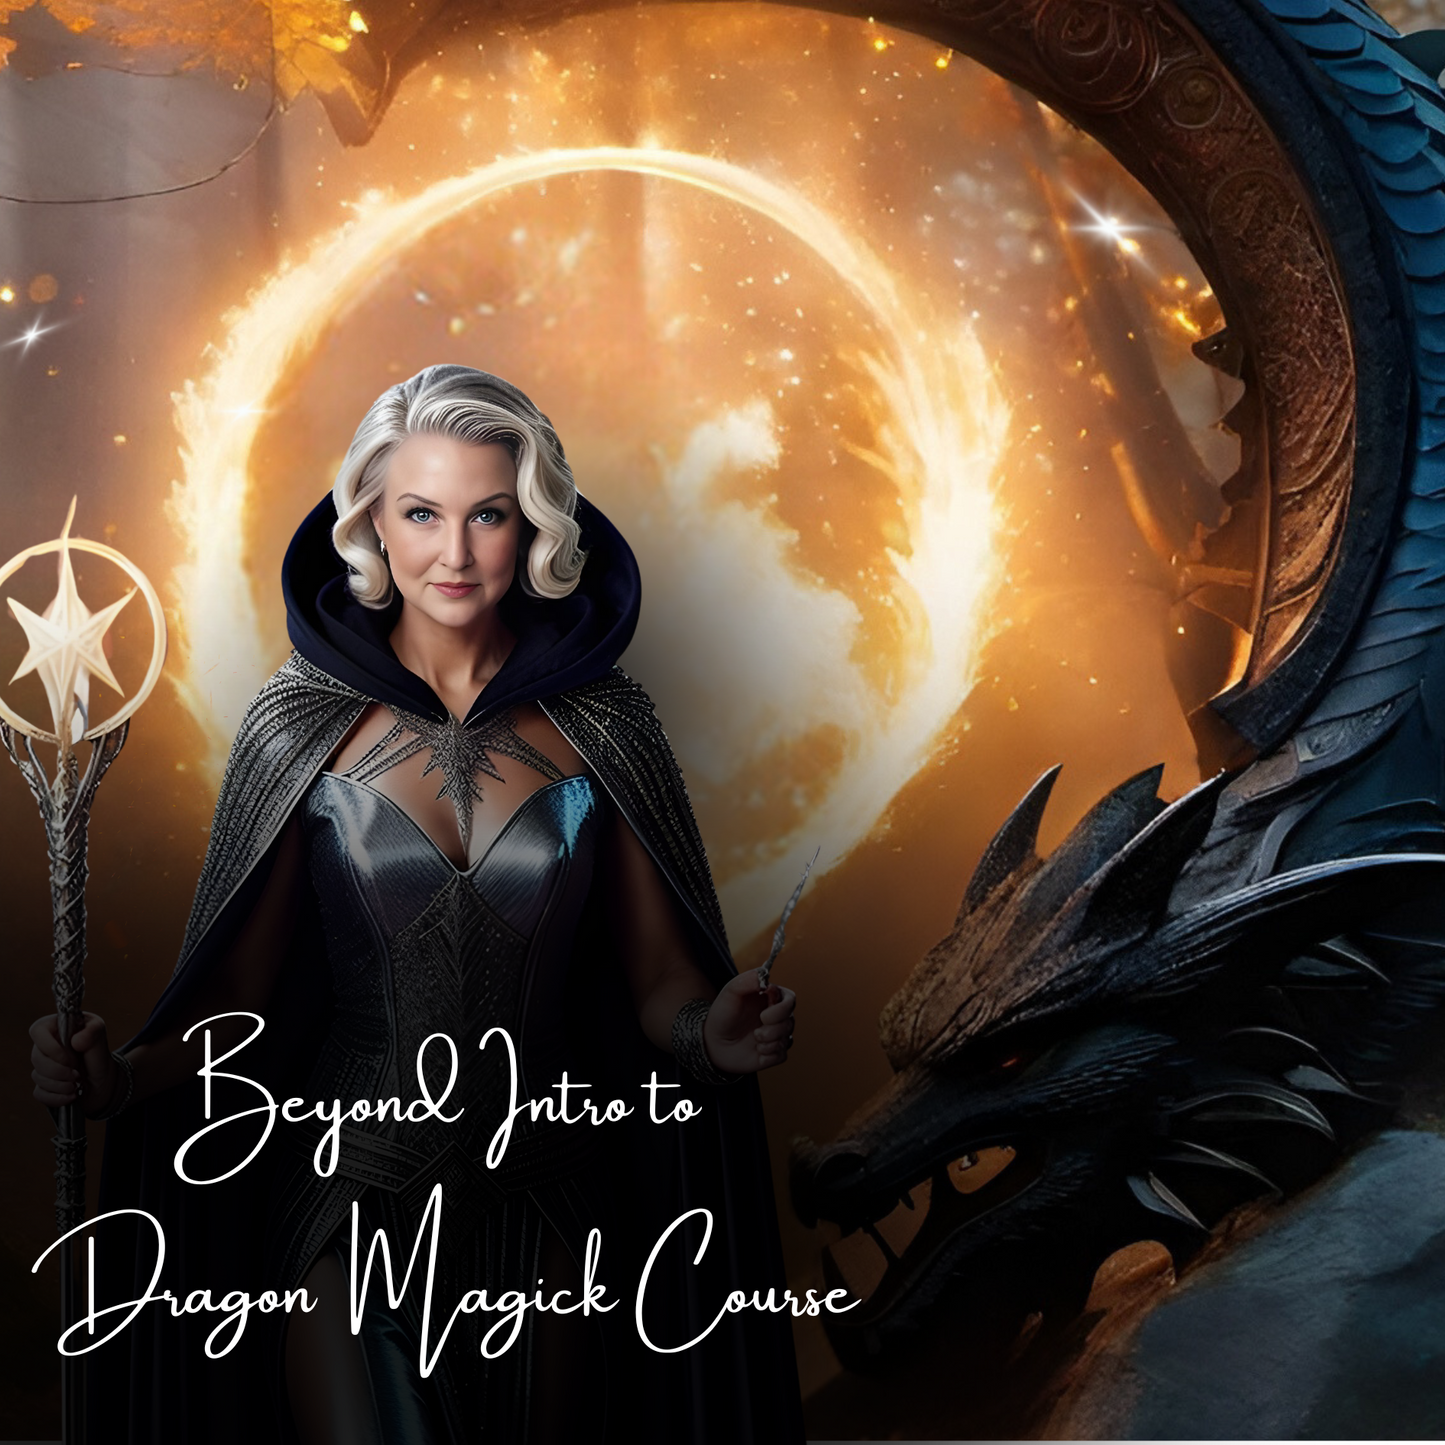 Beyond Intro to Dragon Magick Course